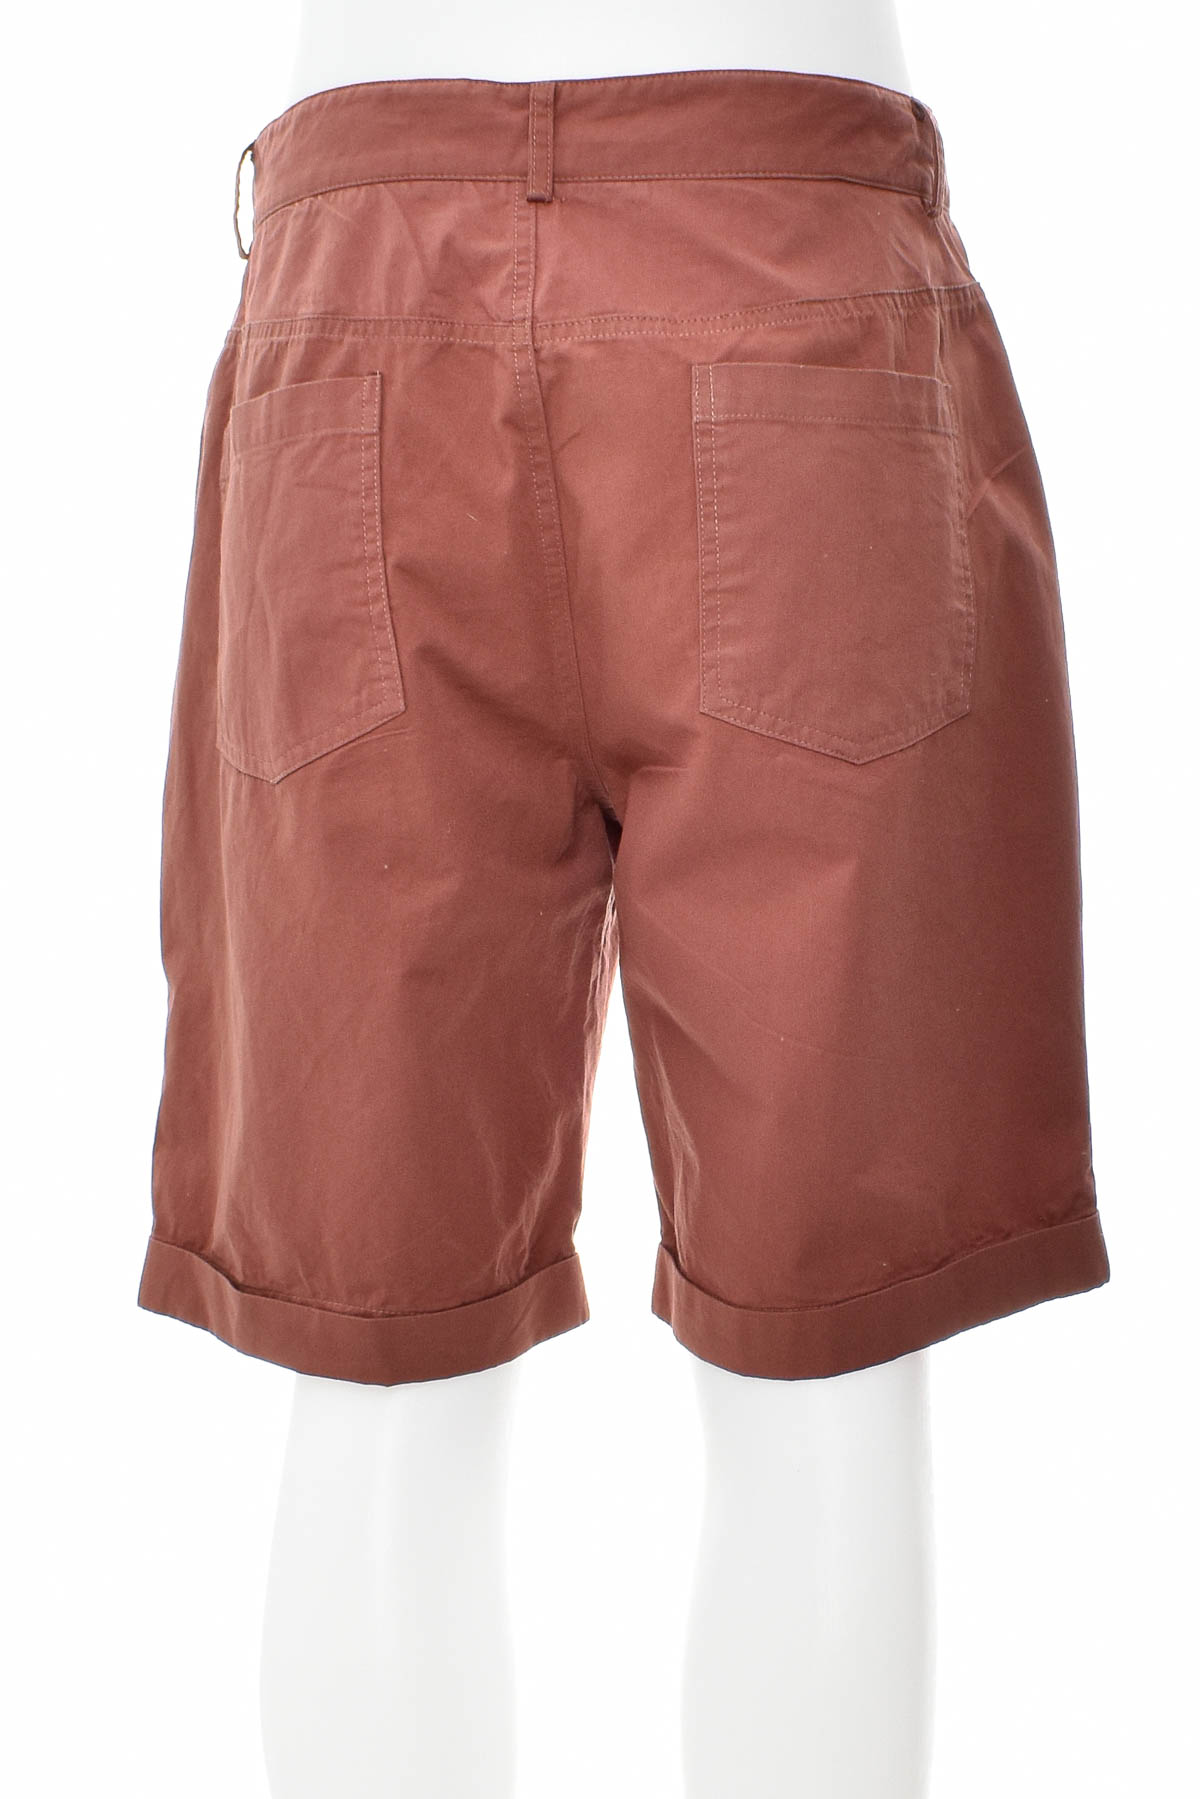 Men's shorts - SHEIN - 1